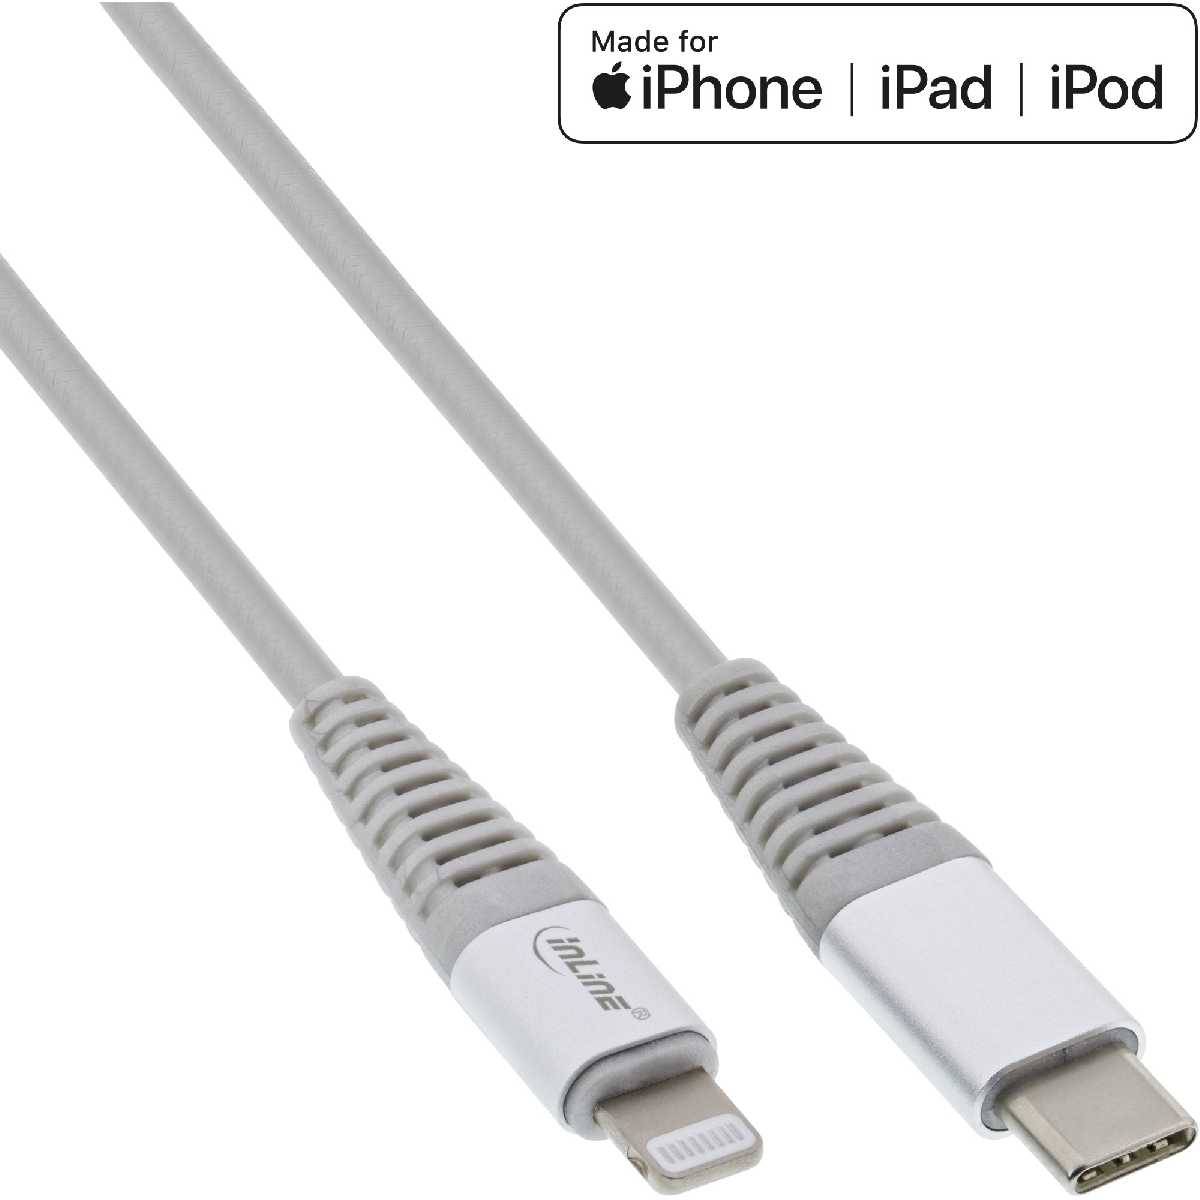 InLine USB-C Lightning Kabel für iPad iPhone iPod silber/Alu 1m MFi-z